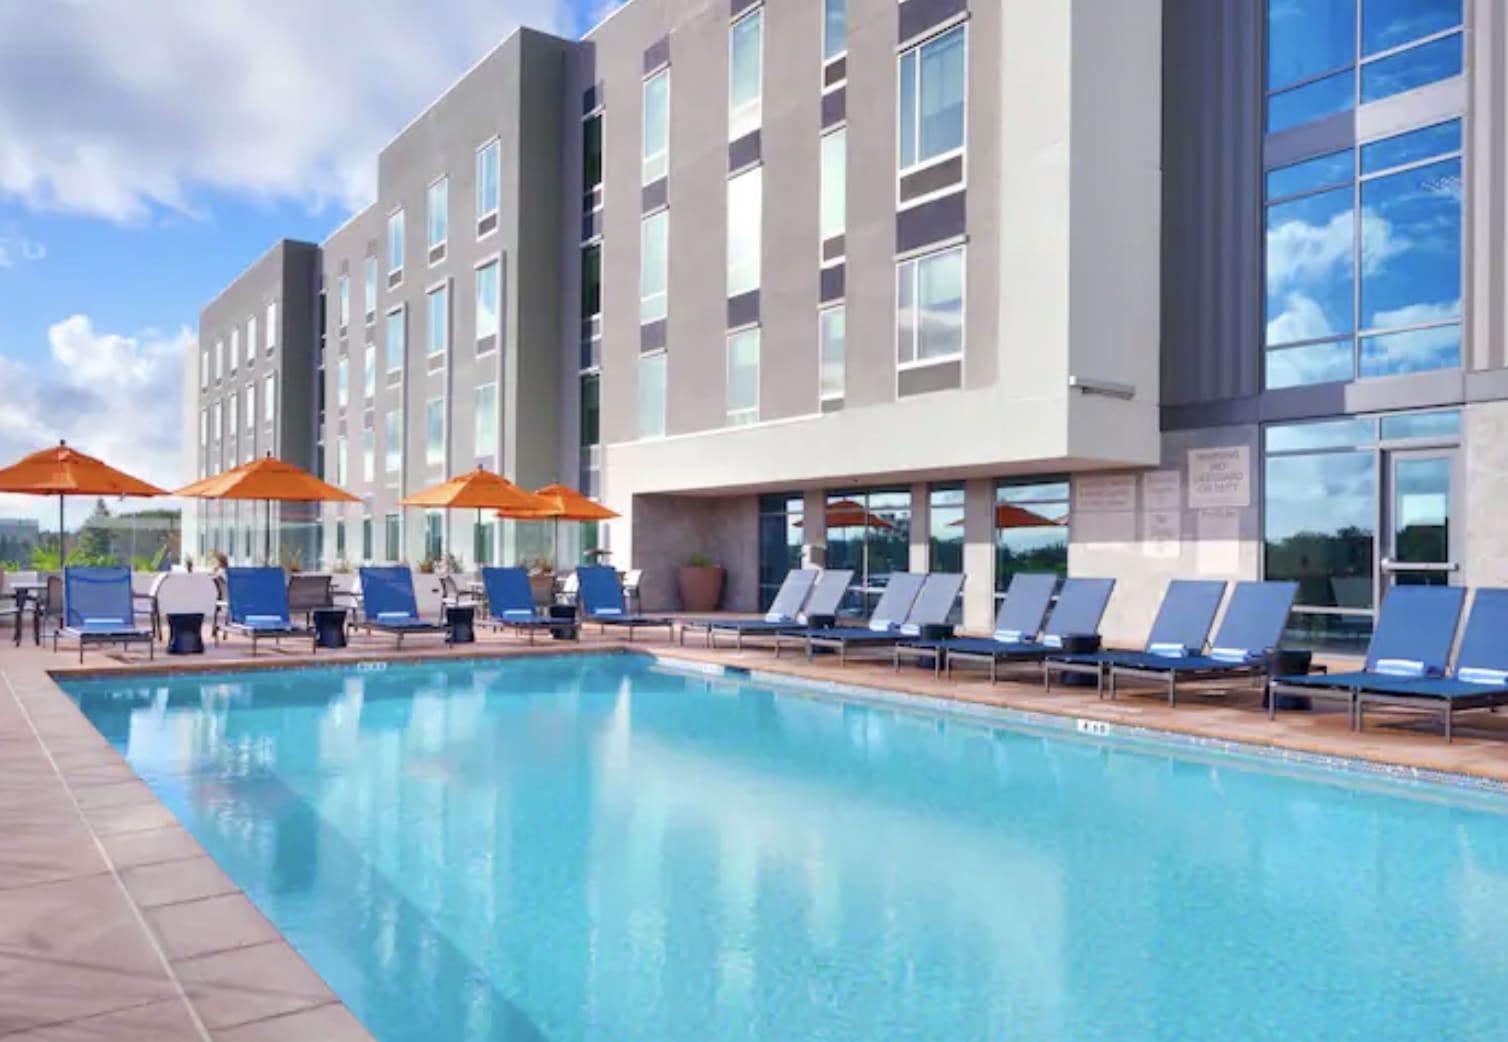 Hampton Inn and Suites Anaheim Convention Center pool area